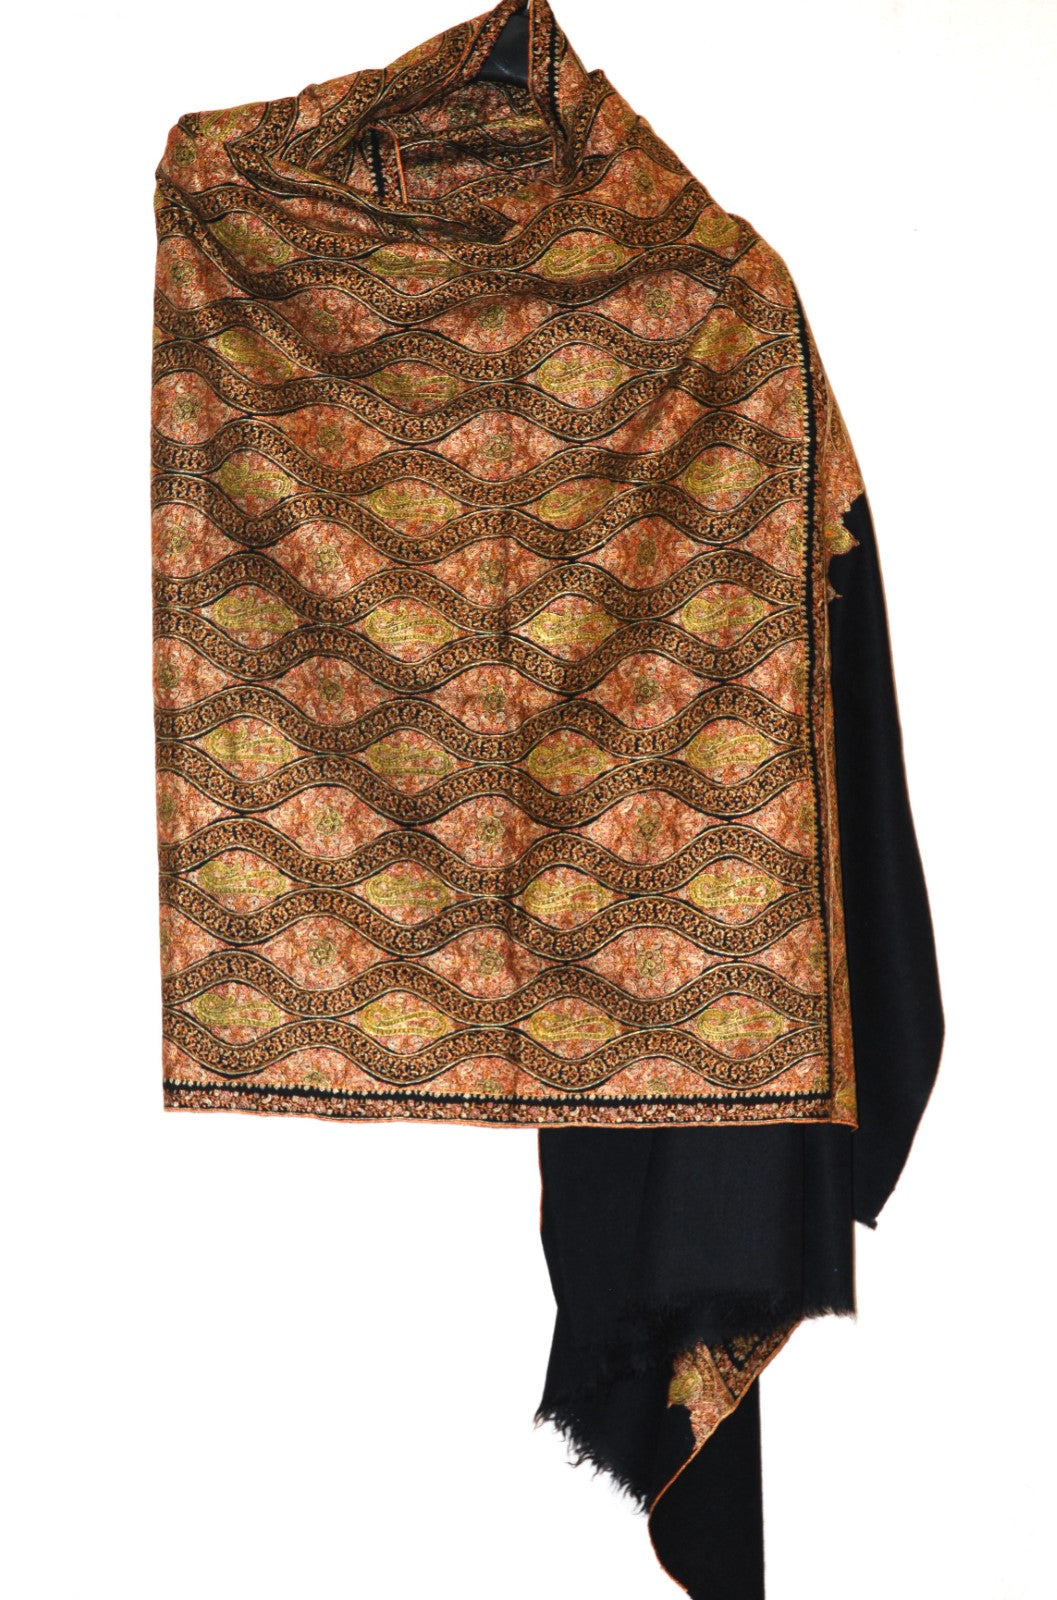 Kashmir Pashmina "Sozni" Needlework Jamawar Shawl Black, Multicolor Embroidery #PJM-003